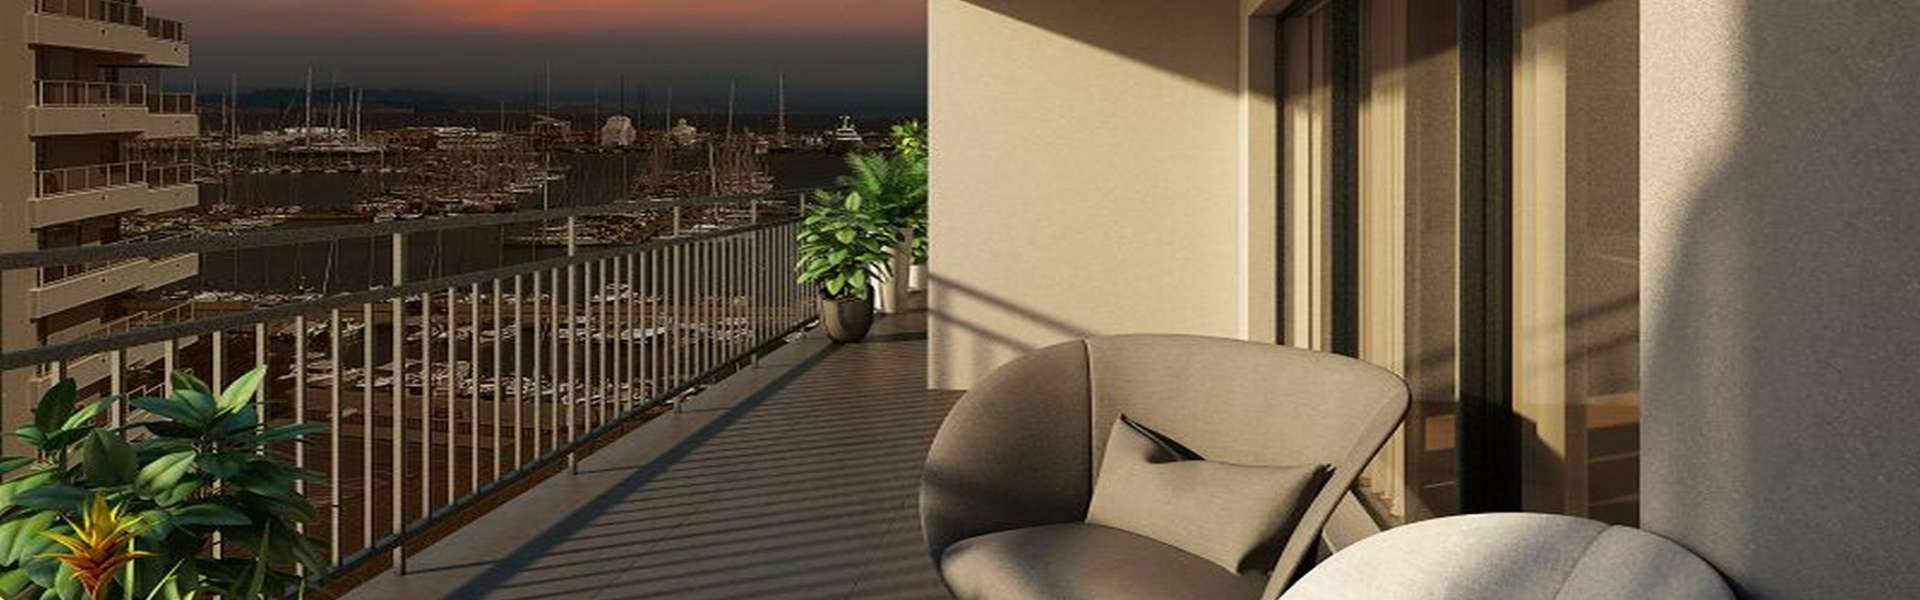 Palma/Son Armadams - Penthouse with beautiful view